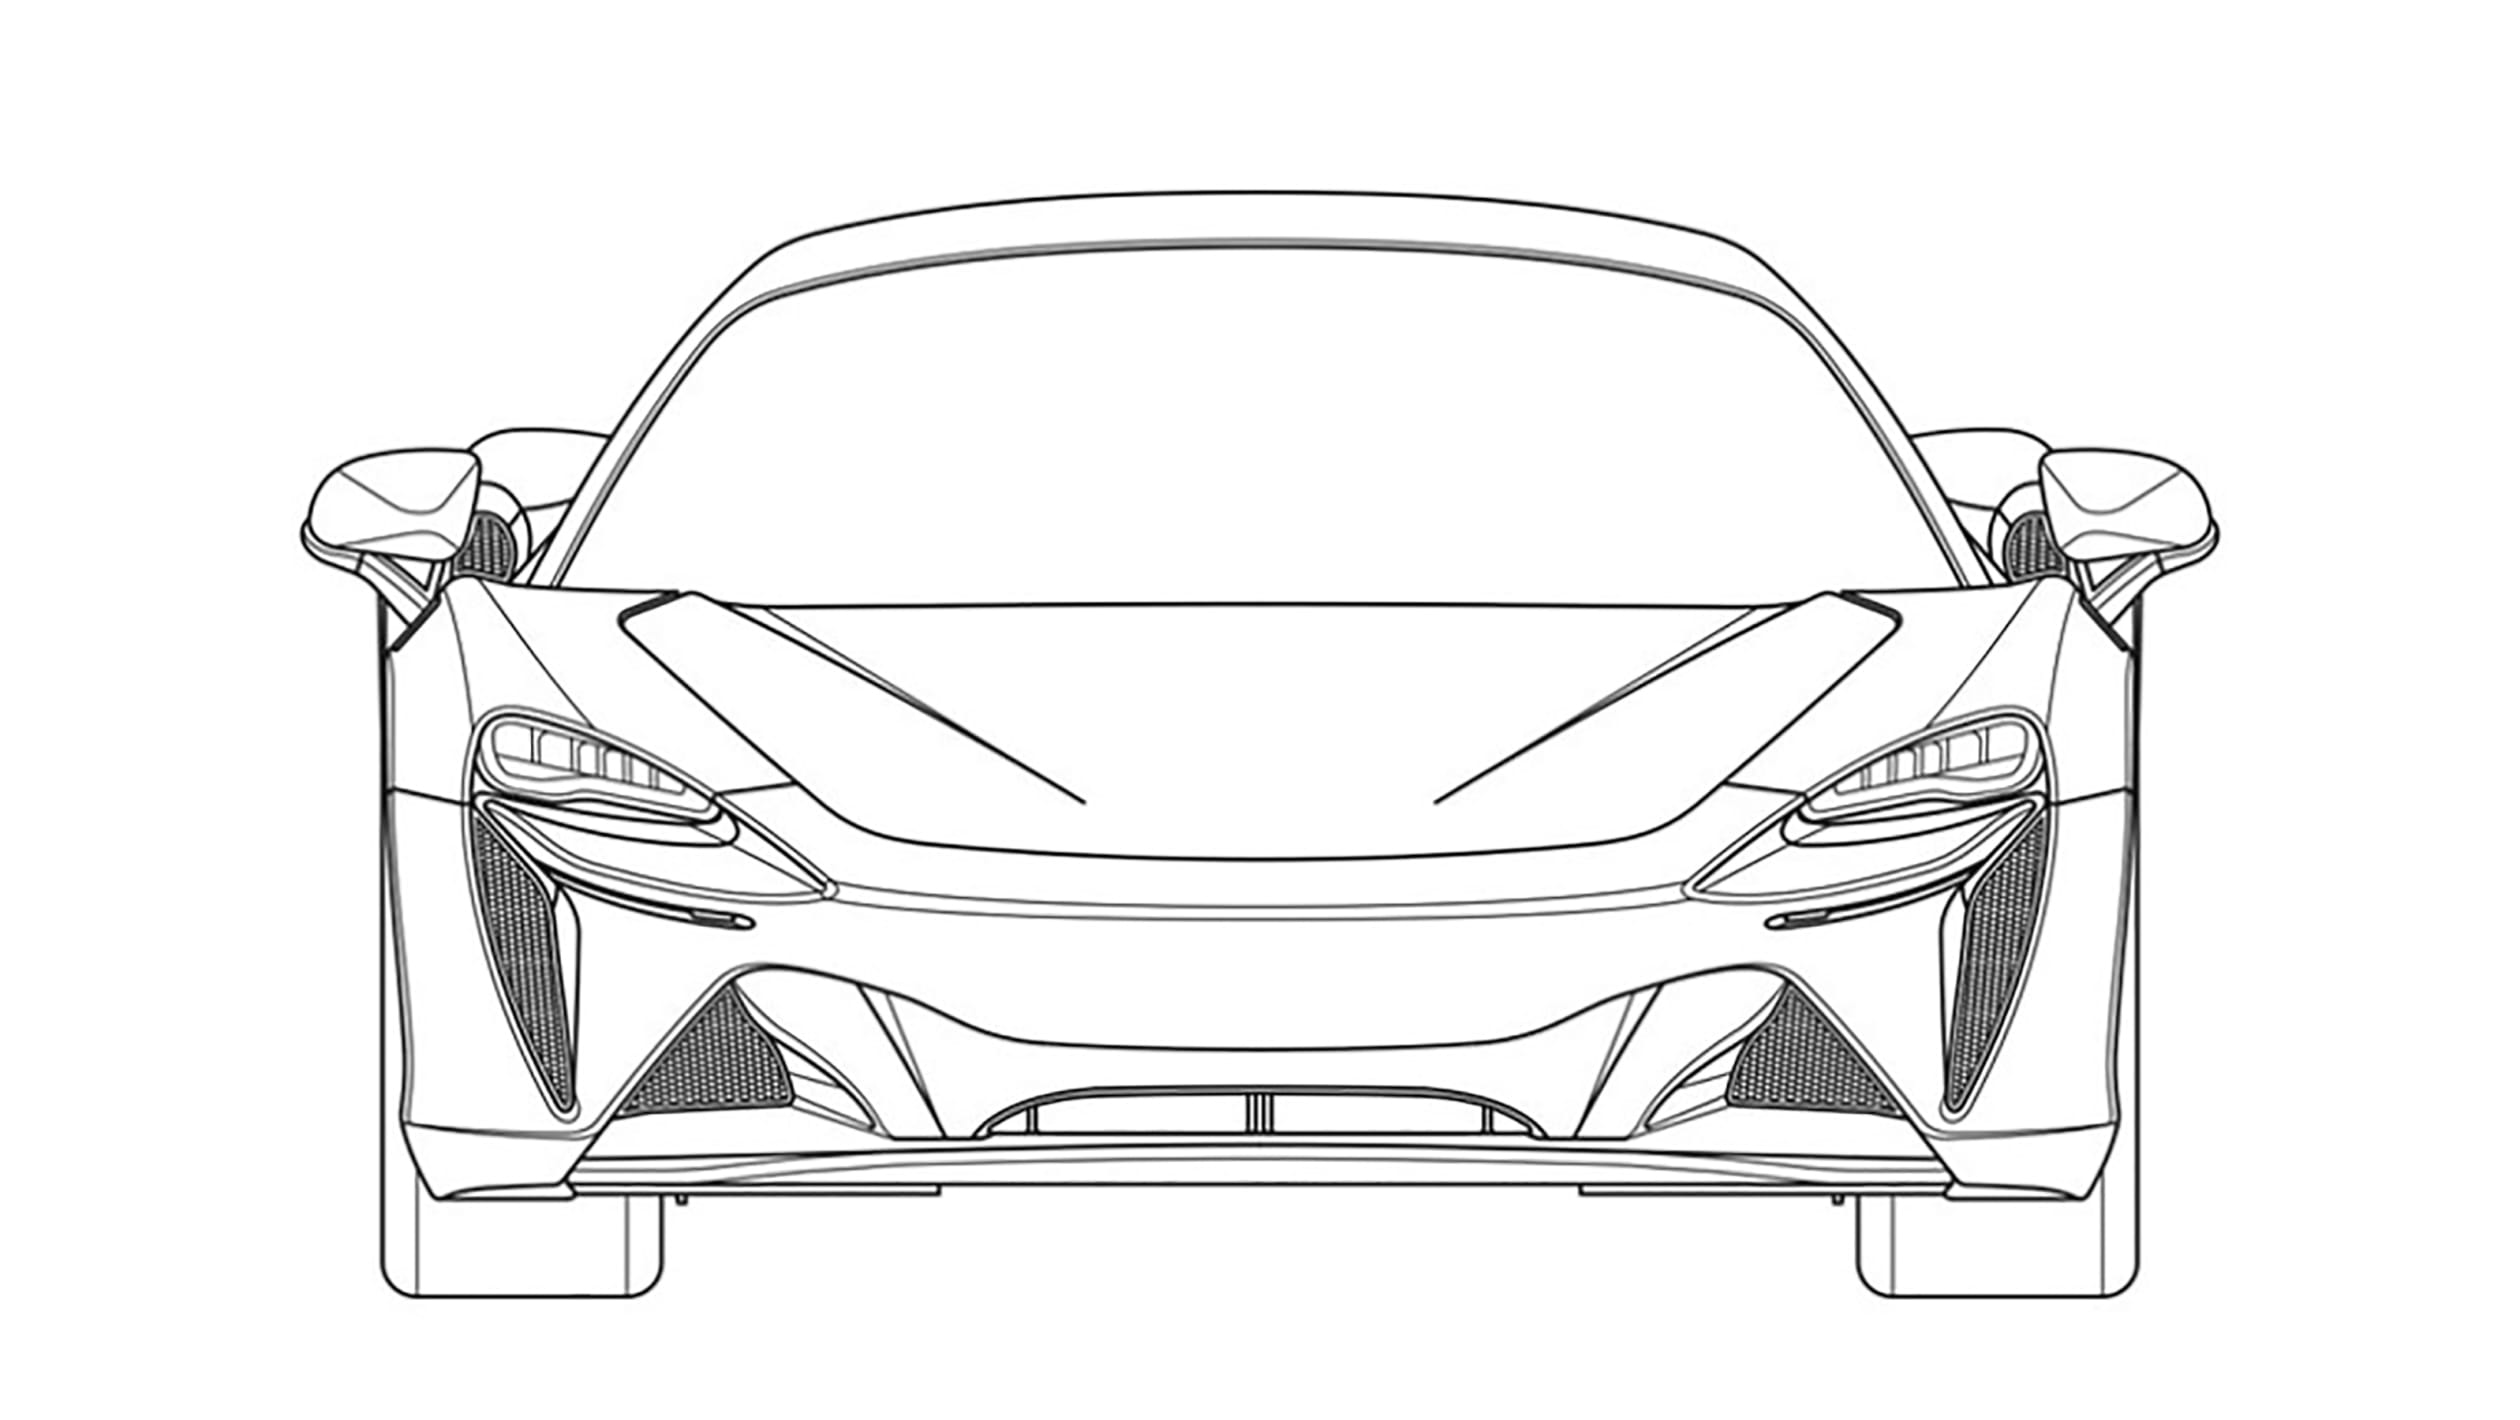 aria-label="McLaren V6 Hybrid 2"